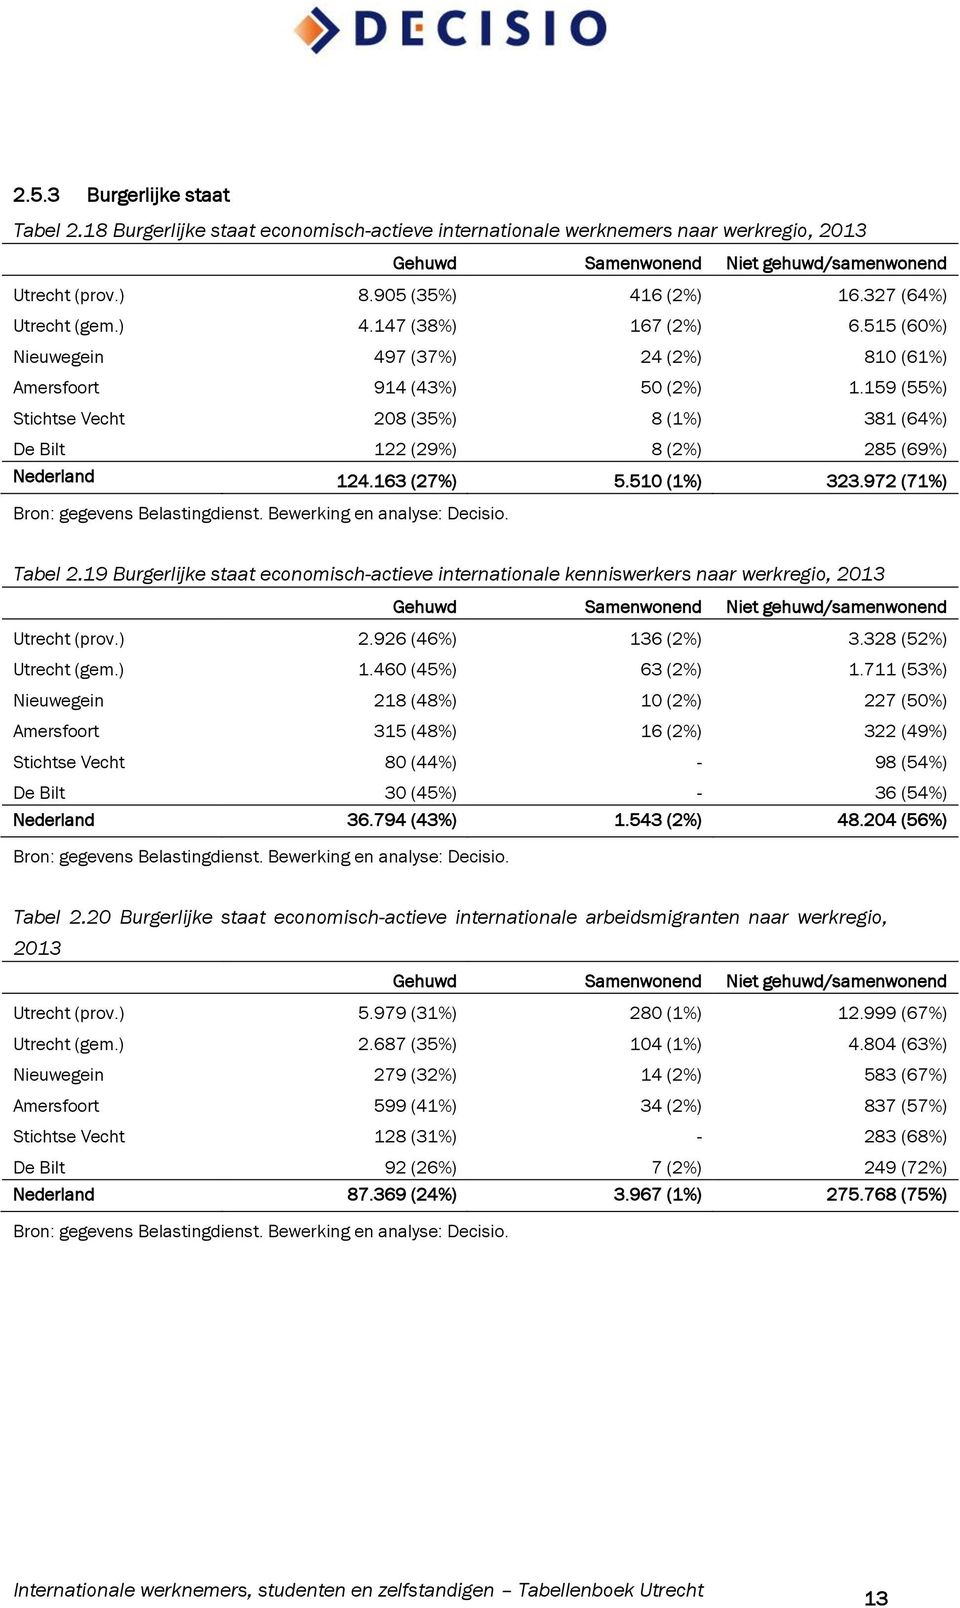 159 (55%) Stichtse Vecht 208 (35%) 8 (1%) 381 (64%) De Bilt 122 (29%) 8 (2%) 285 (69%) Nederland 124.163 (27%) 5.510 (1%) 323.972 (71%) Tabel 2.